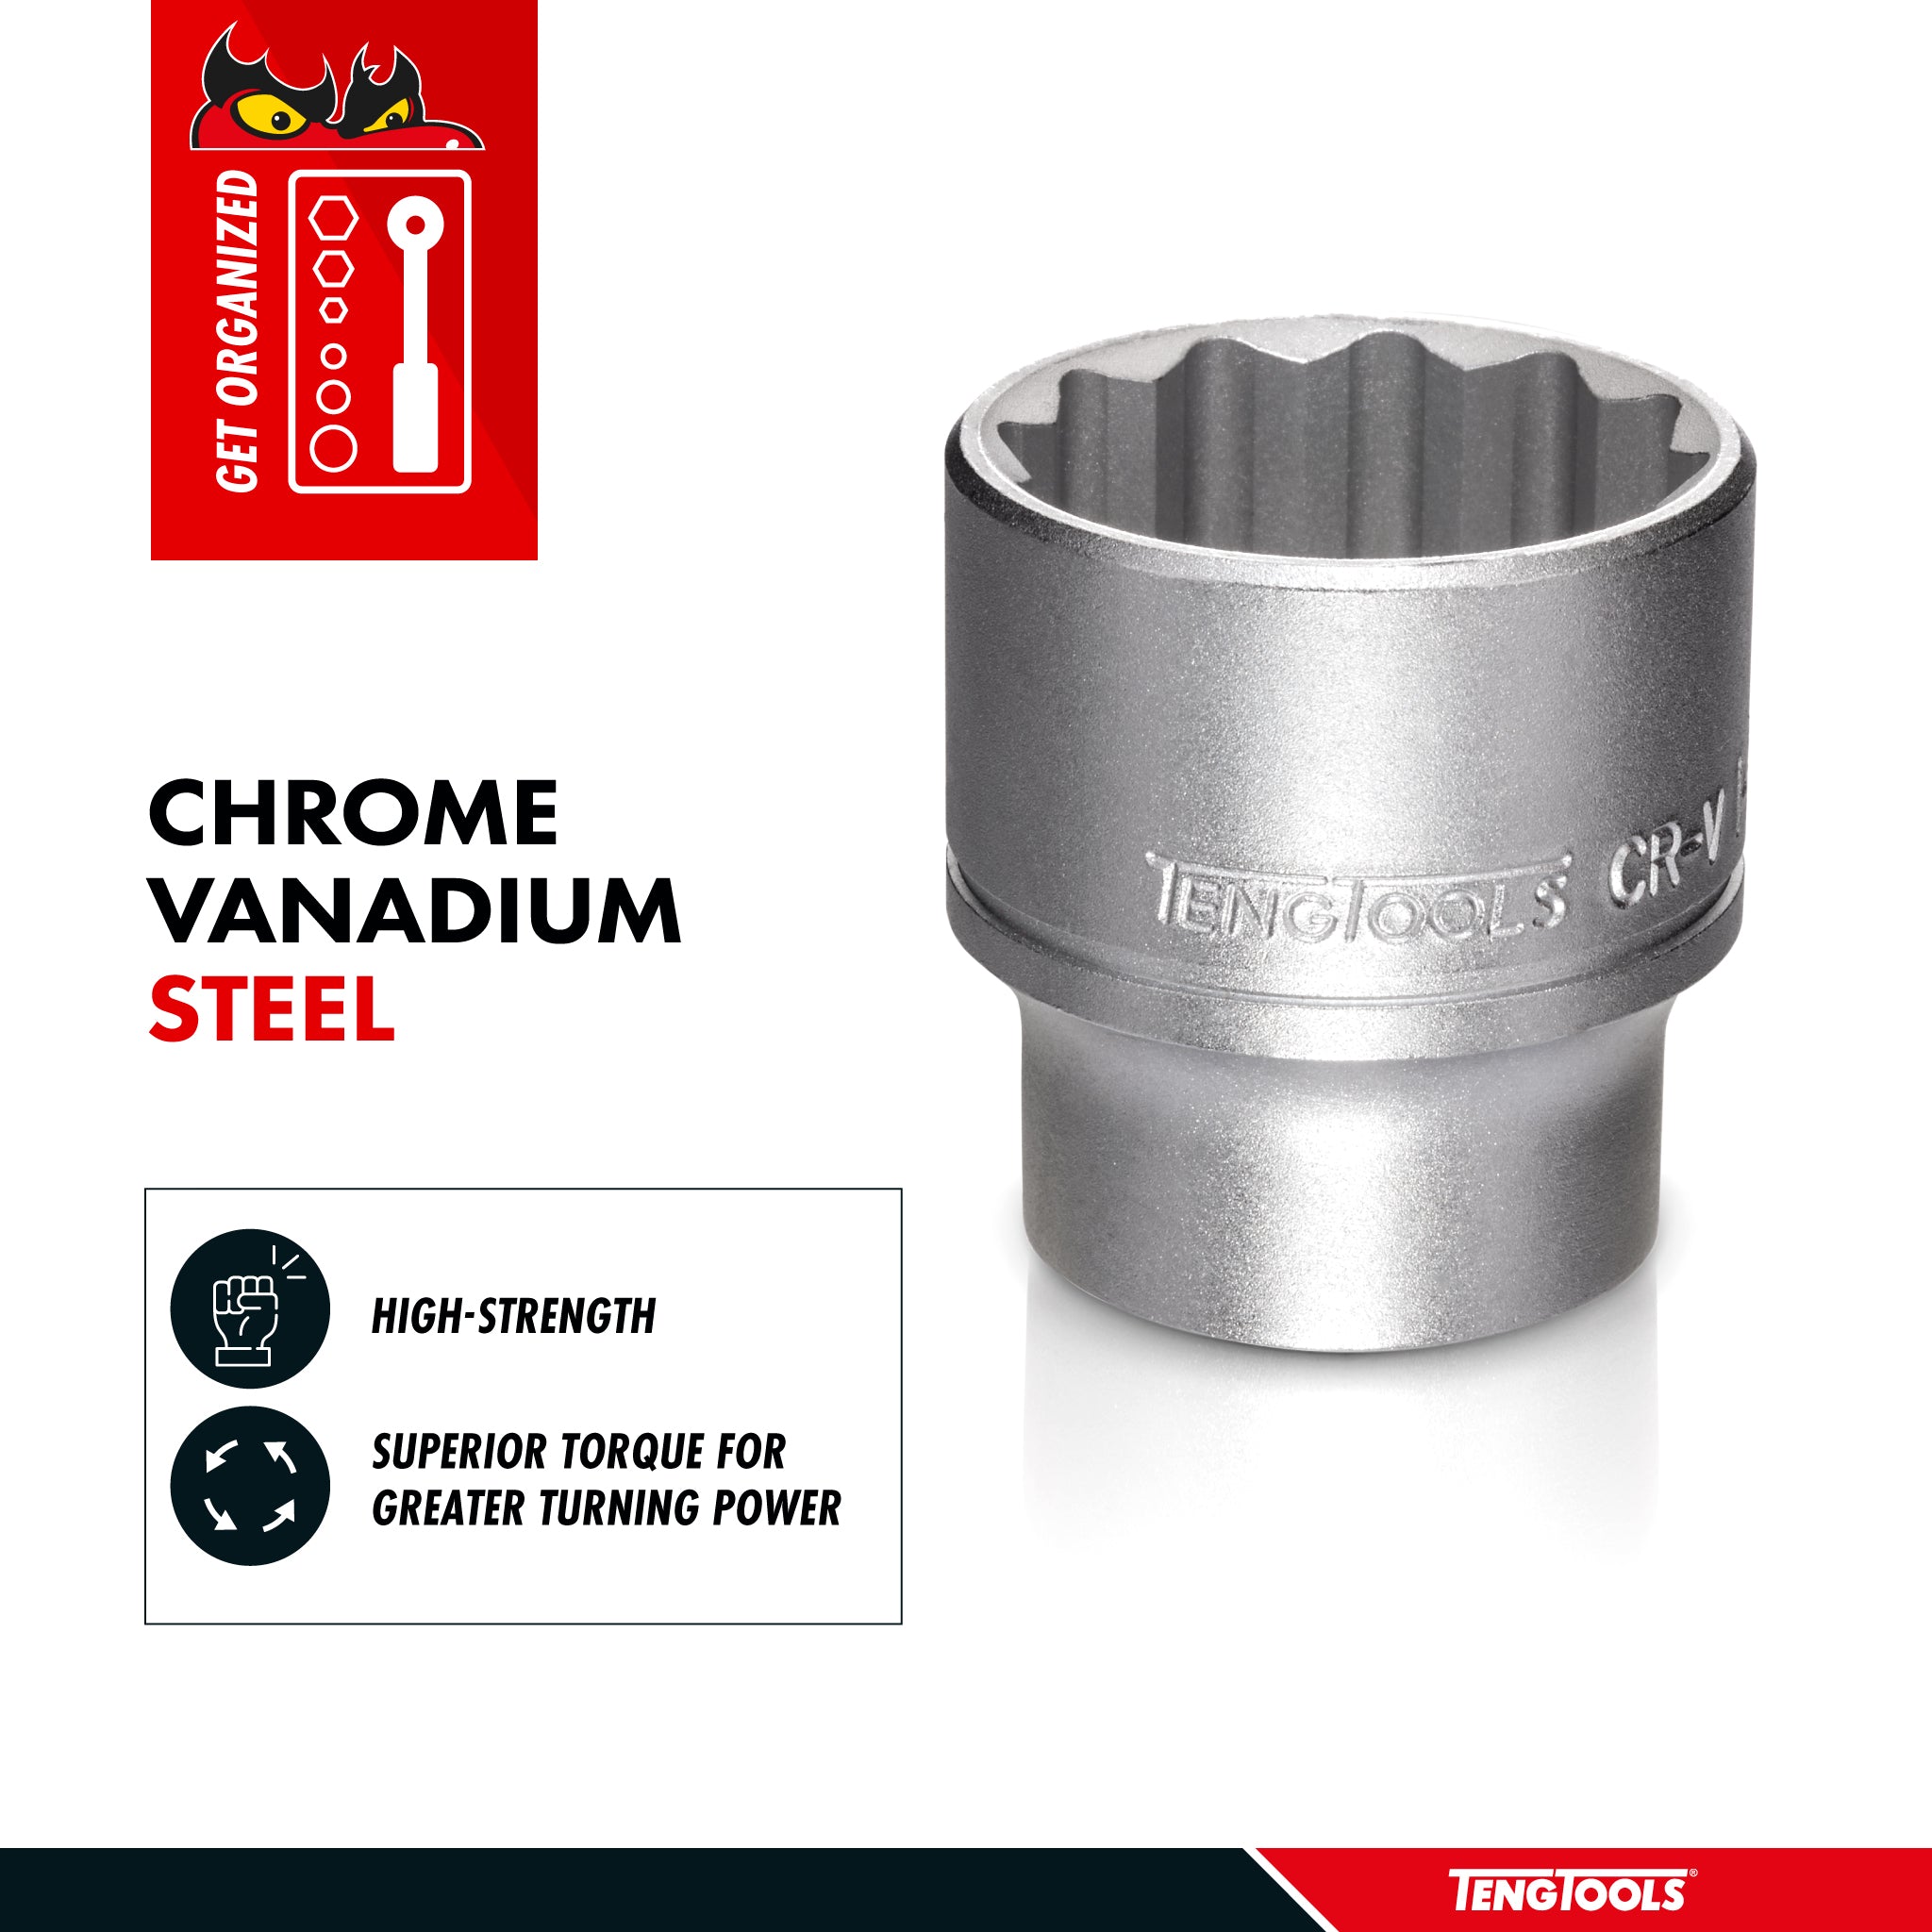 Teng Tools 1/2 Inch Drive 12 Point Metric Shallow Chrome Vanadium Sockets - 9mm